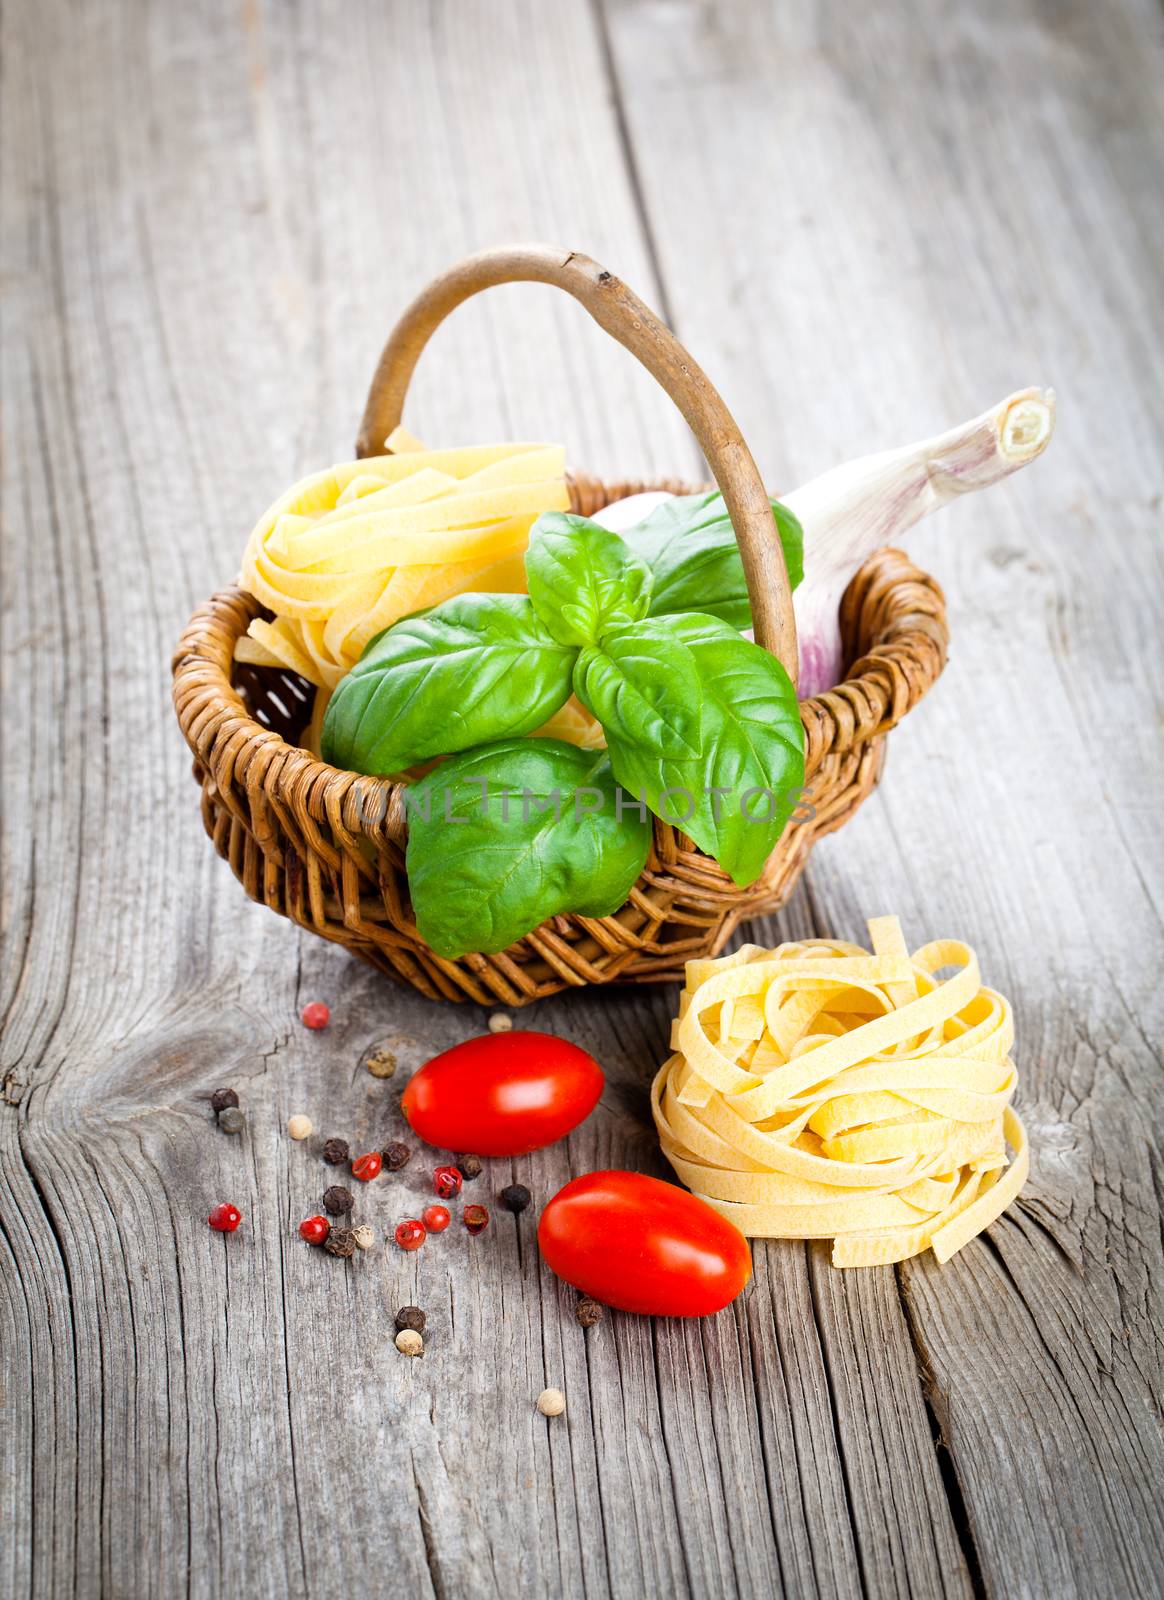 Italian pasta fettuccine nest with garlic, tomatoes and fresh ba by motorolka